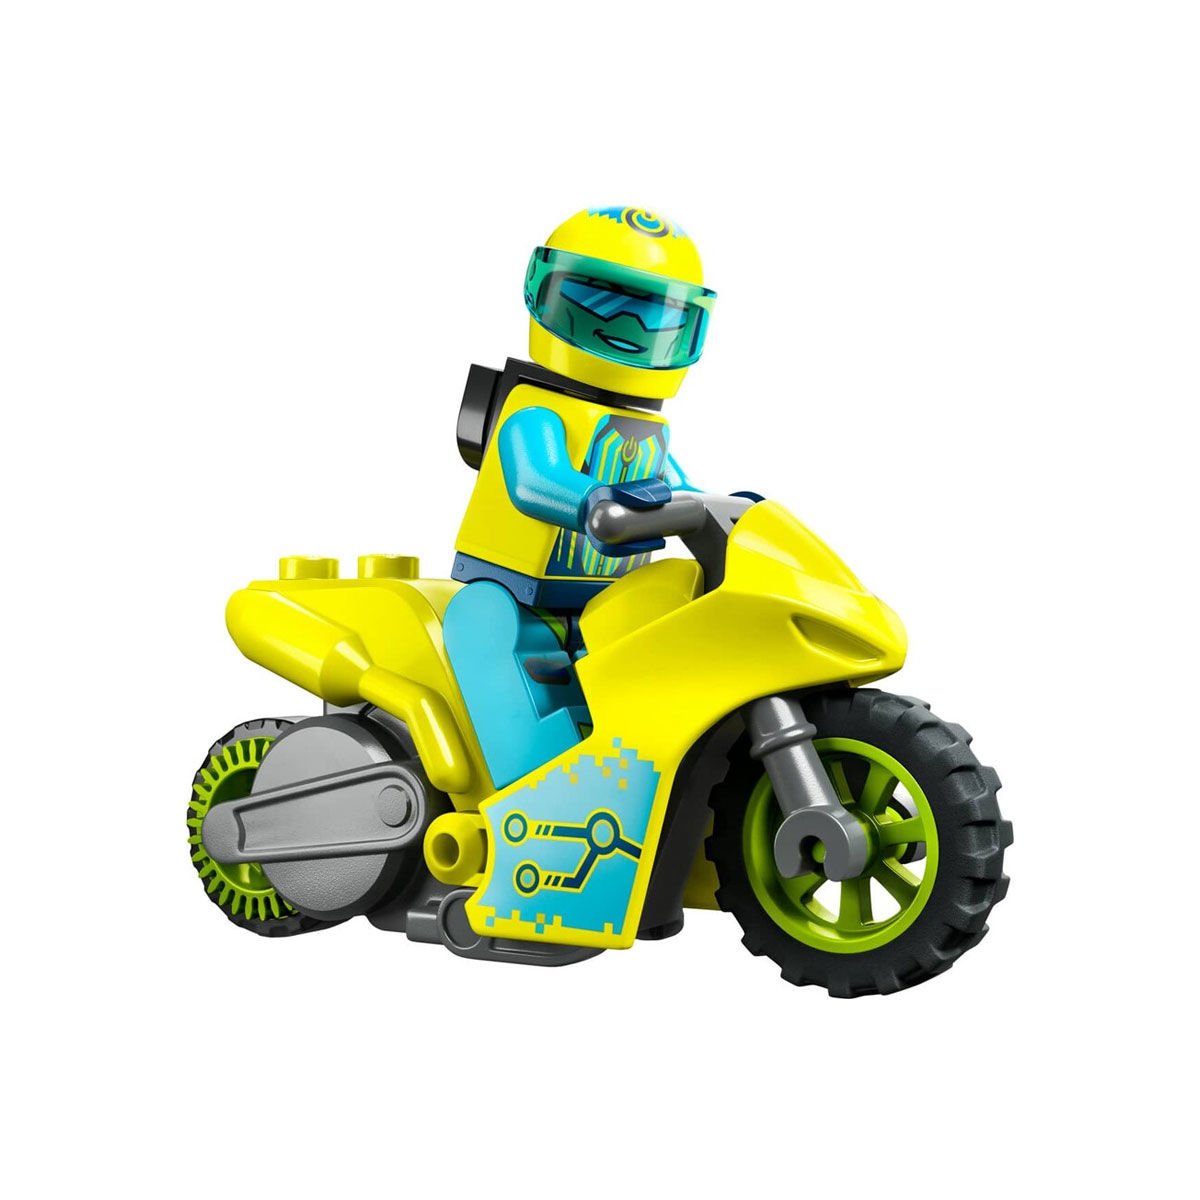 60358 Lego City - Siber Gösteri Motosikleti 13 parça +5 yaş